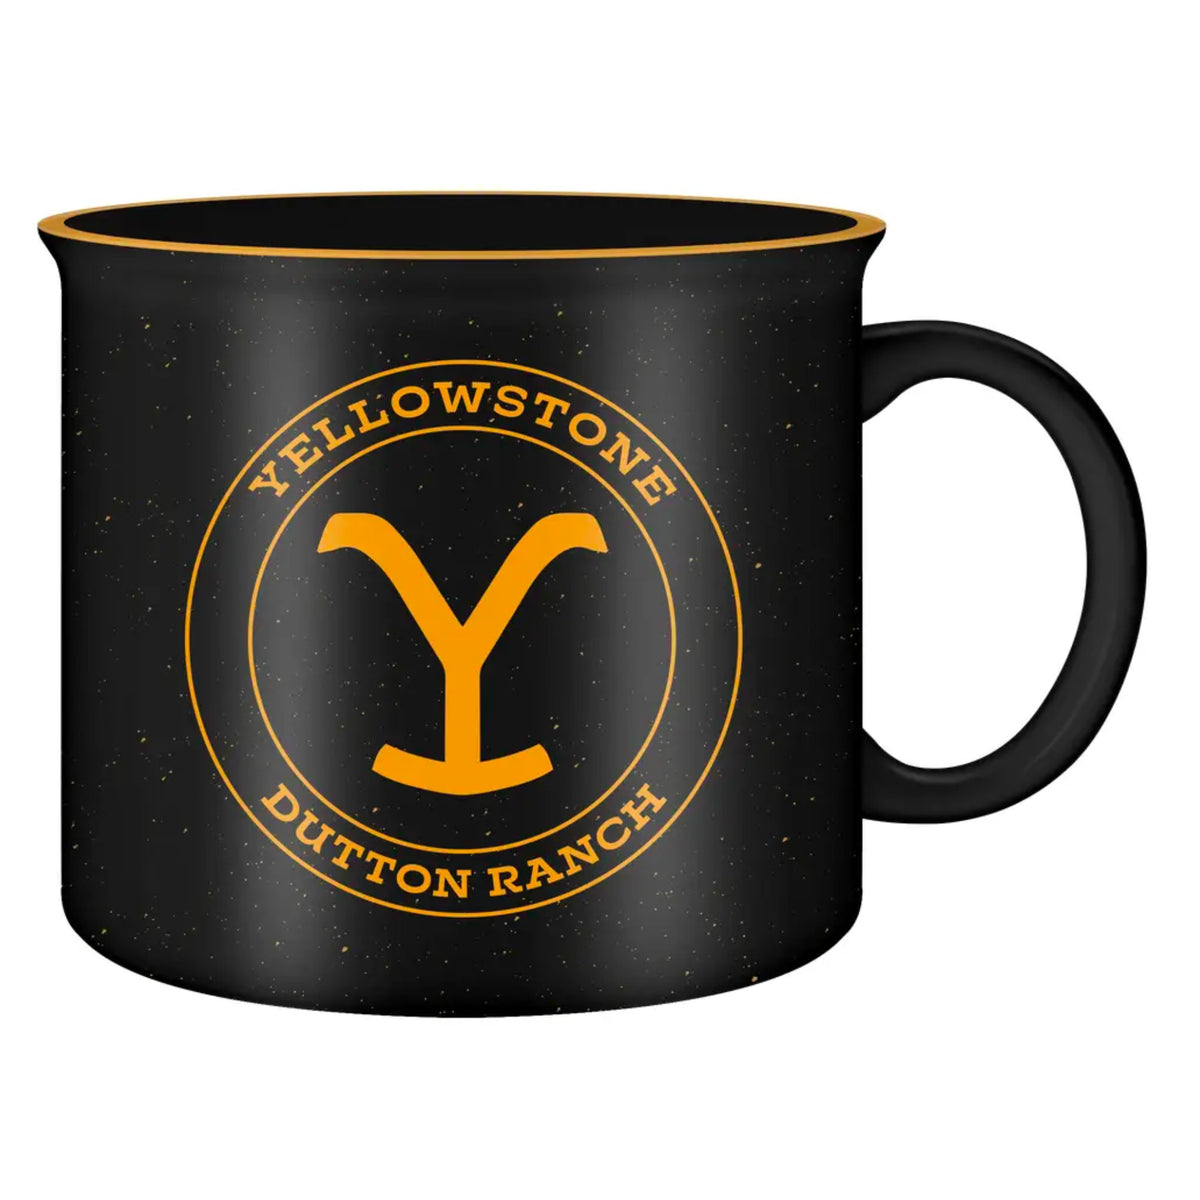 Yellowstone Dutton Ranch 20oz Ceramic Camper Mug